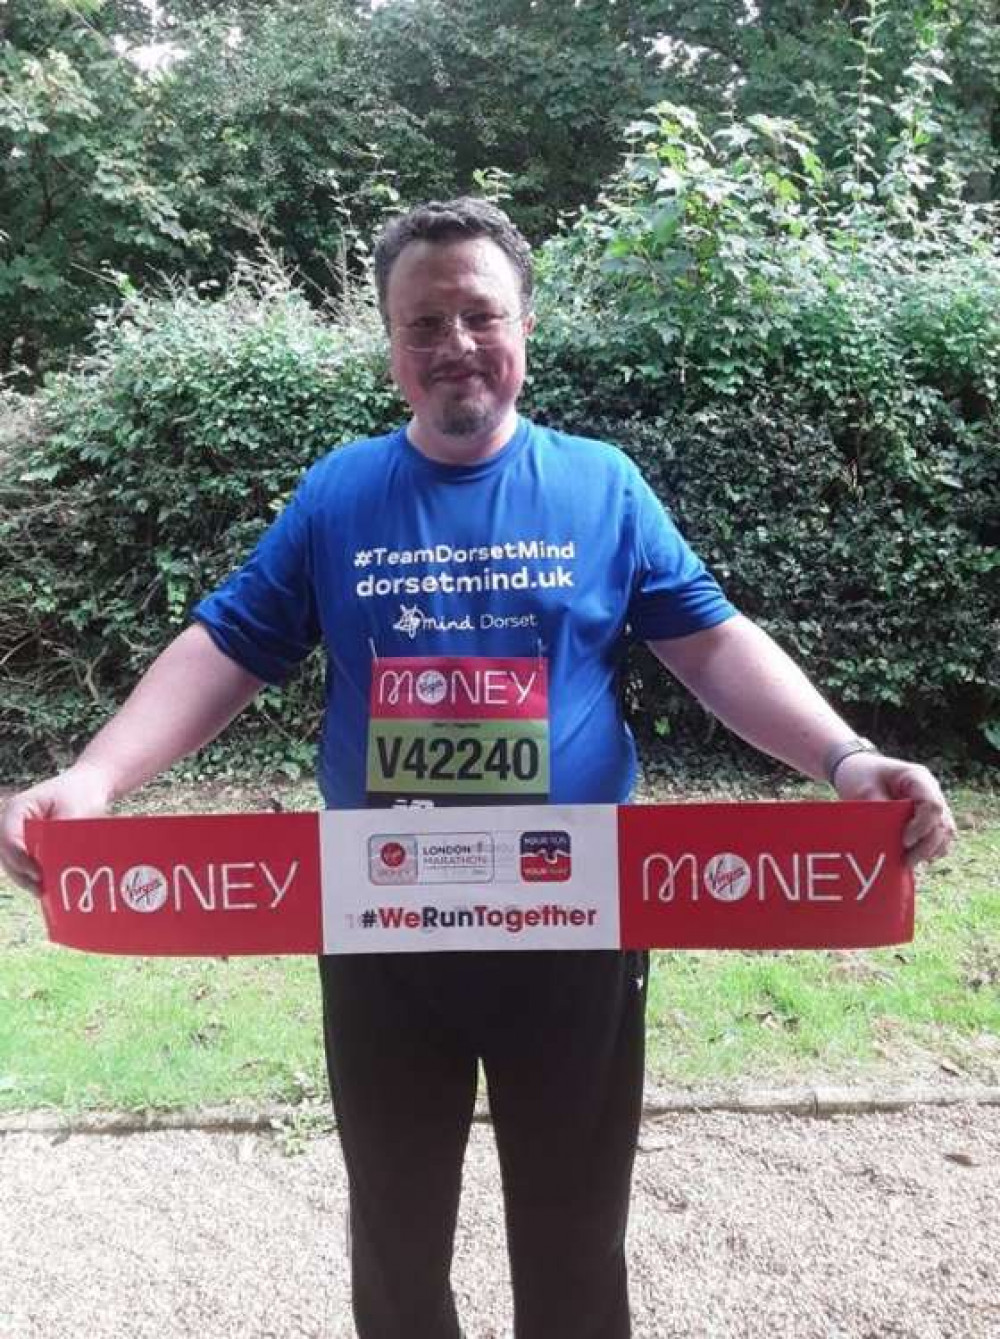 Jon Wood from Axminster completed the Virgin Money Virtual London Marathon on Sunday, running the 26.2 mile distance around Devon and Dorset